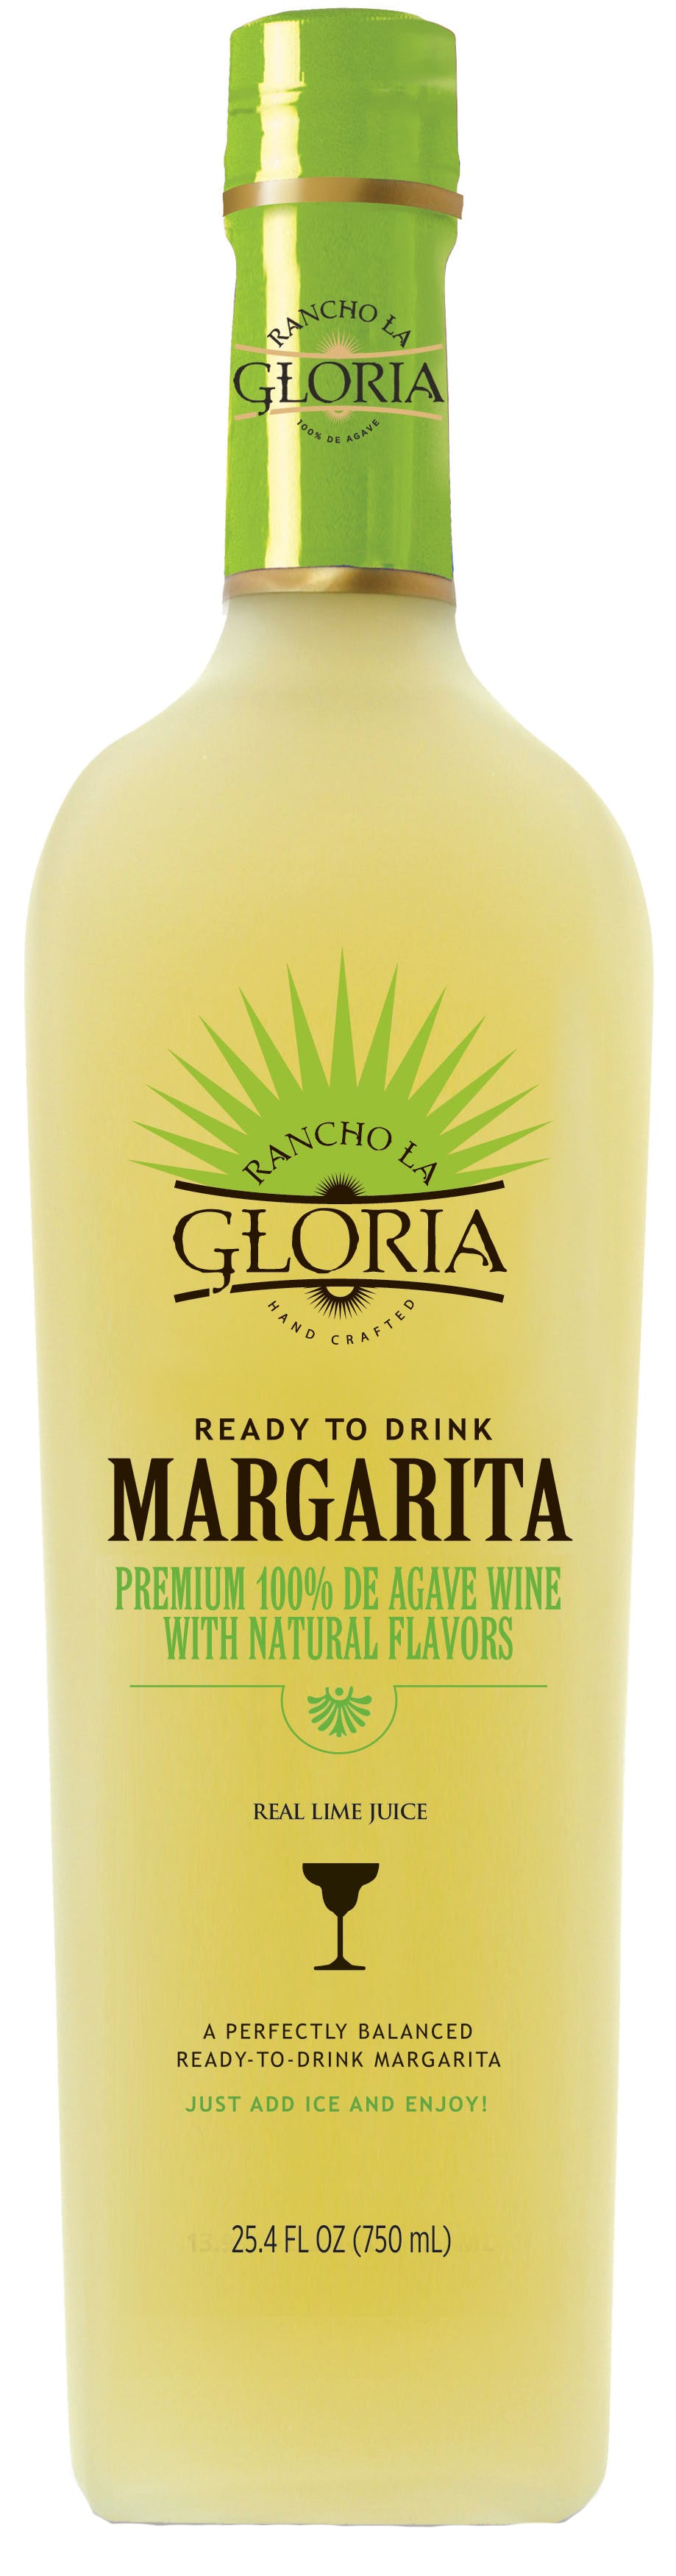 glorias margarita bottle